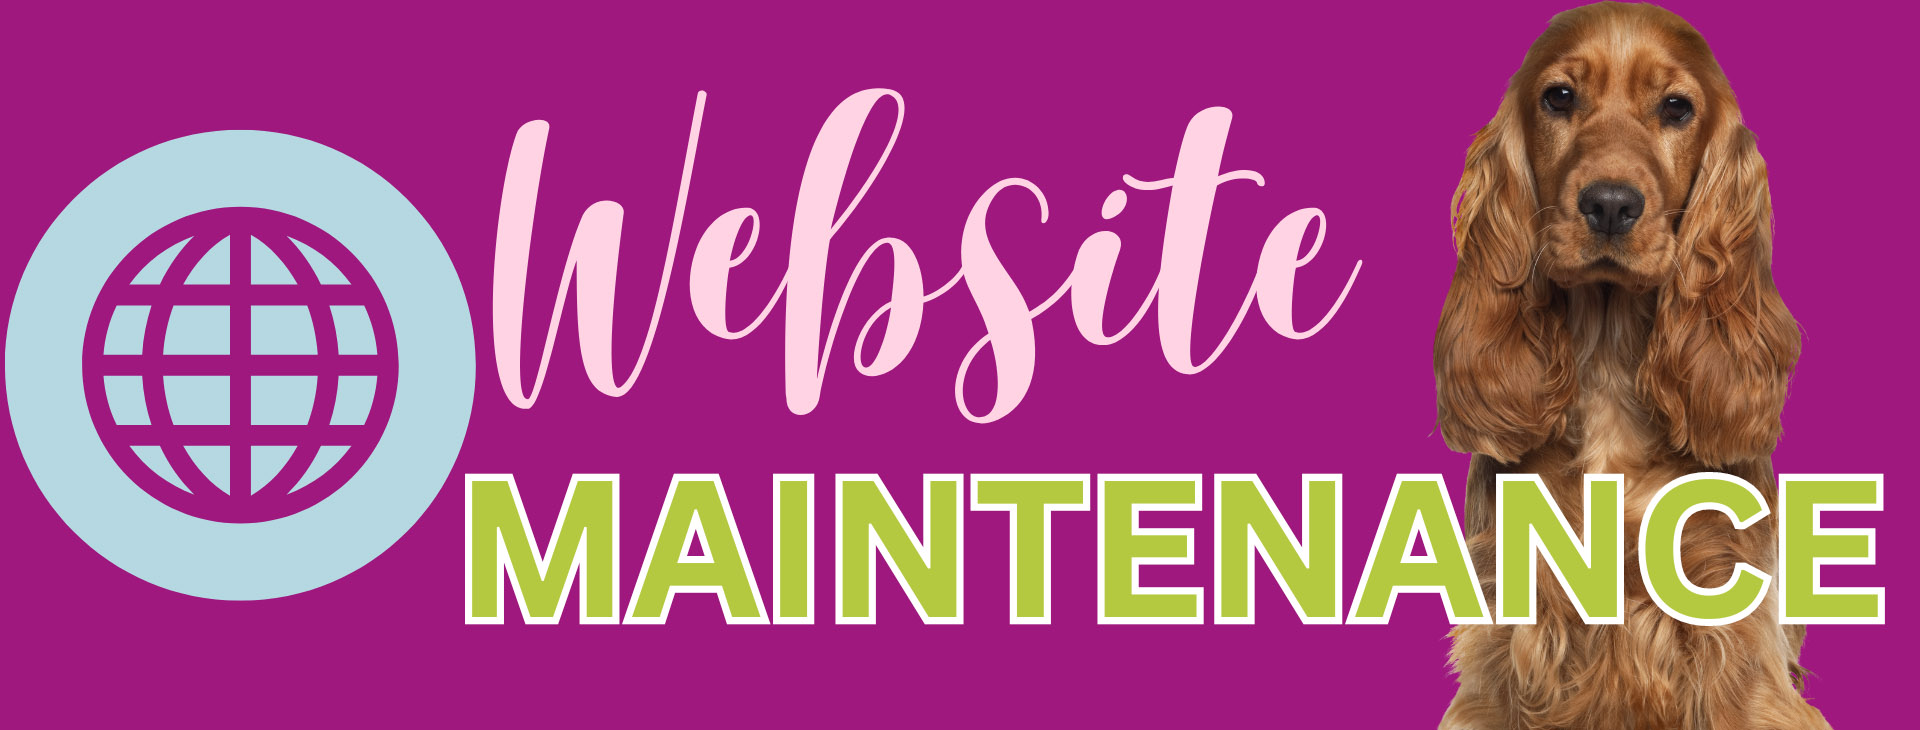 Website_Maintenance